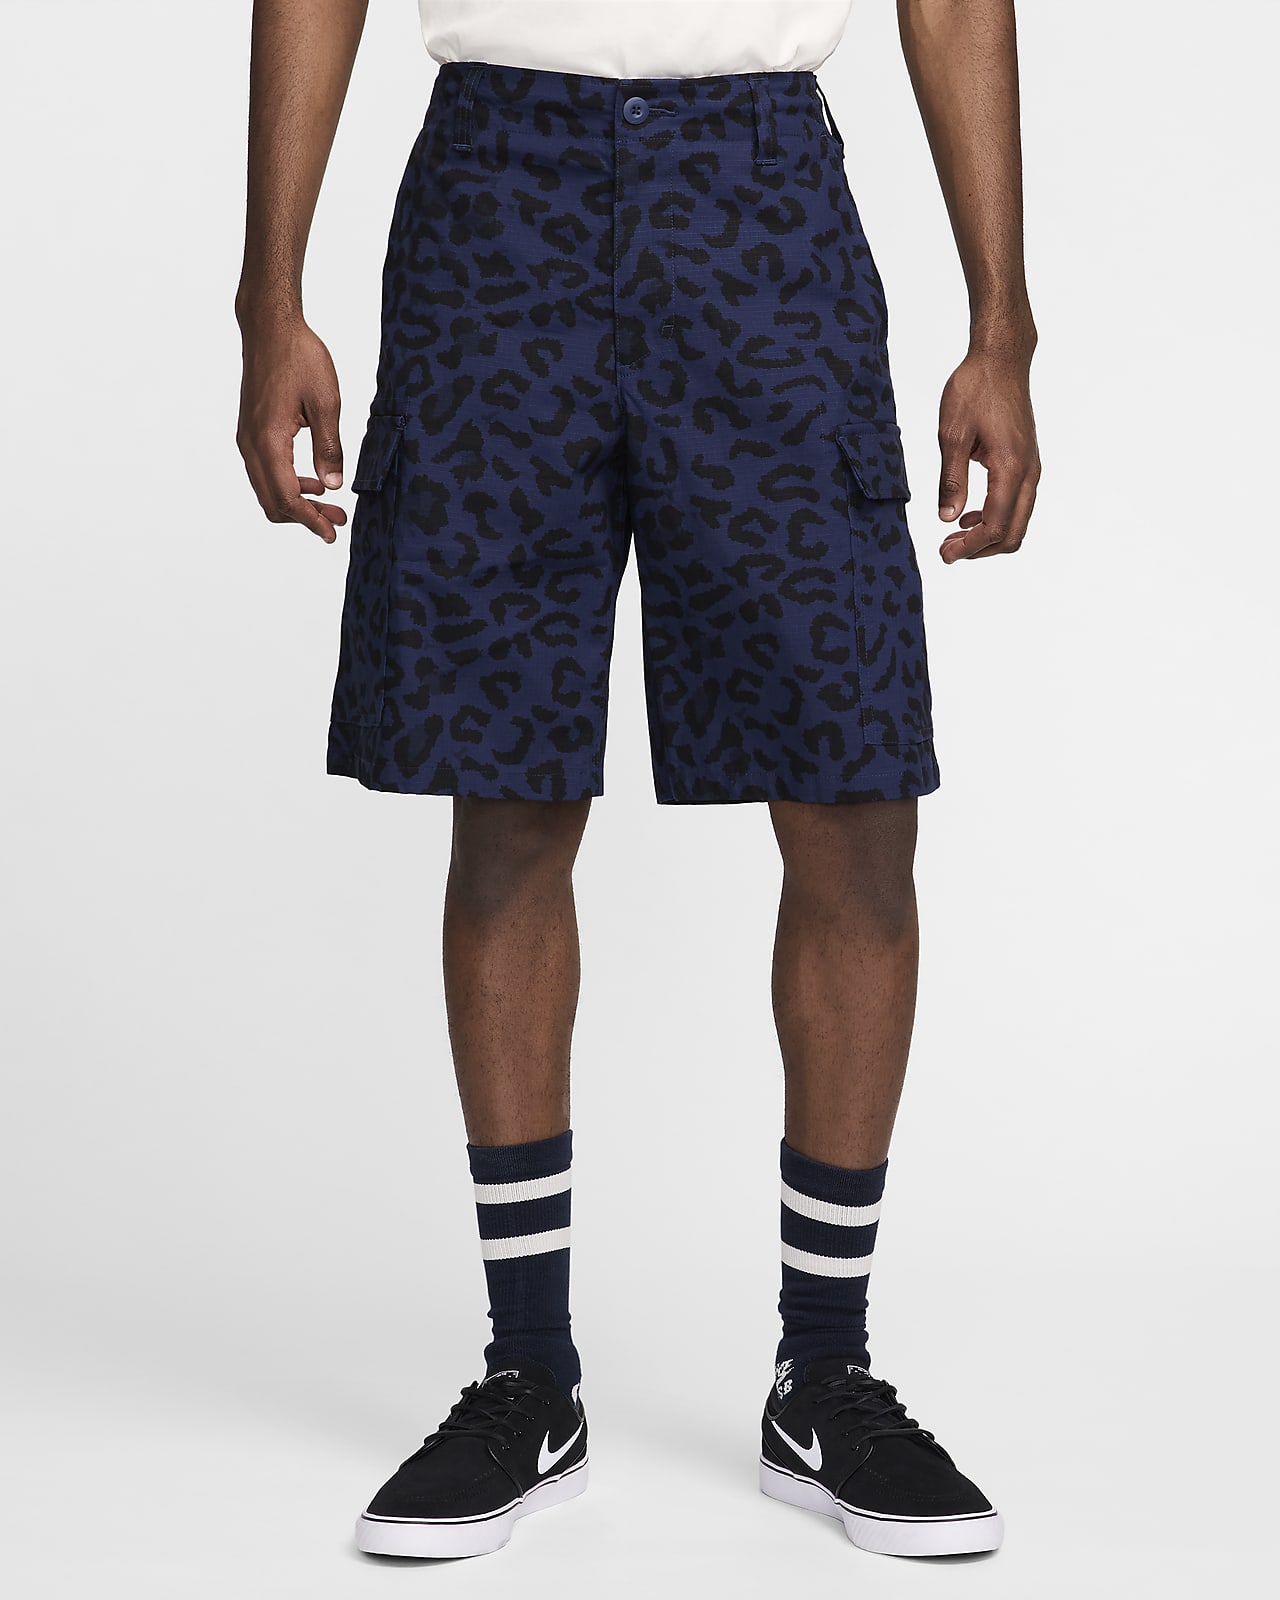 Nike SB Kearny Pantalons curts amb estampat per tota la peça - Home